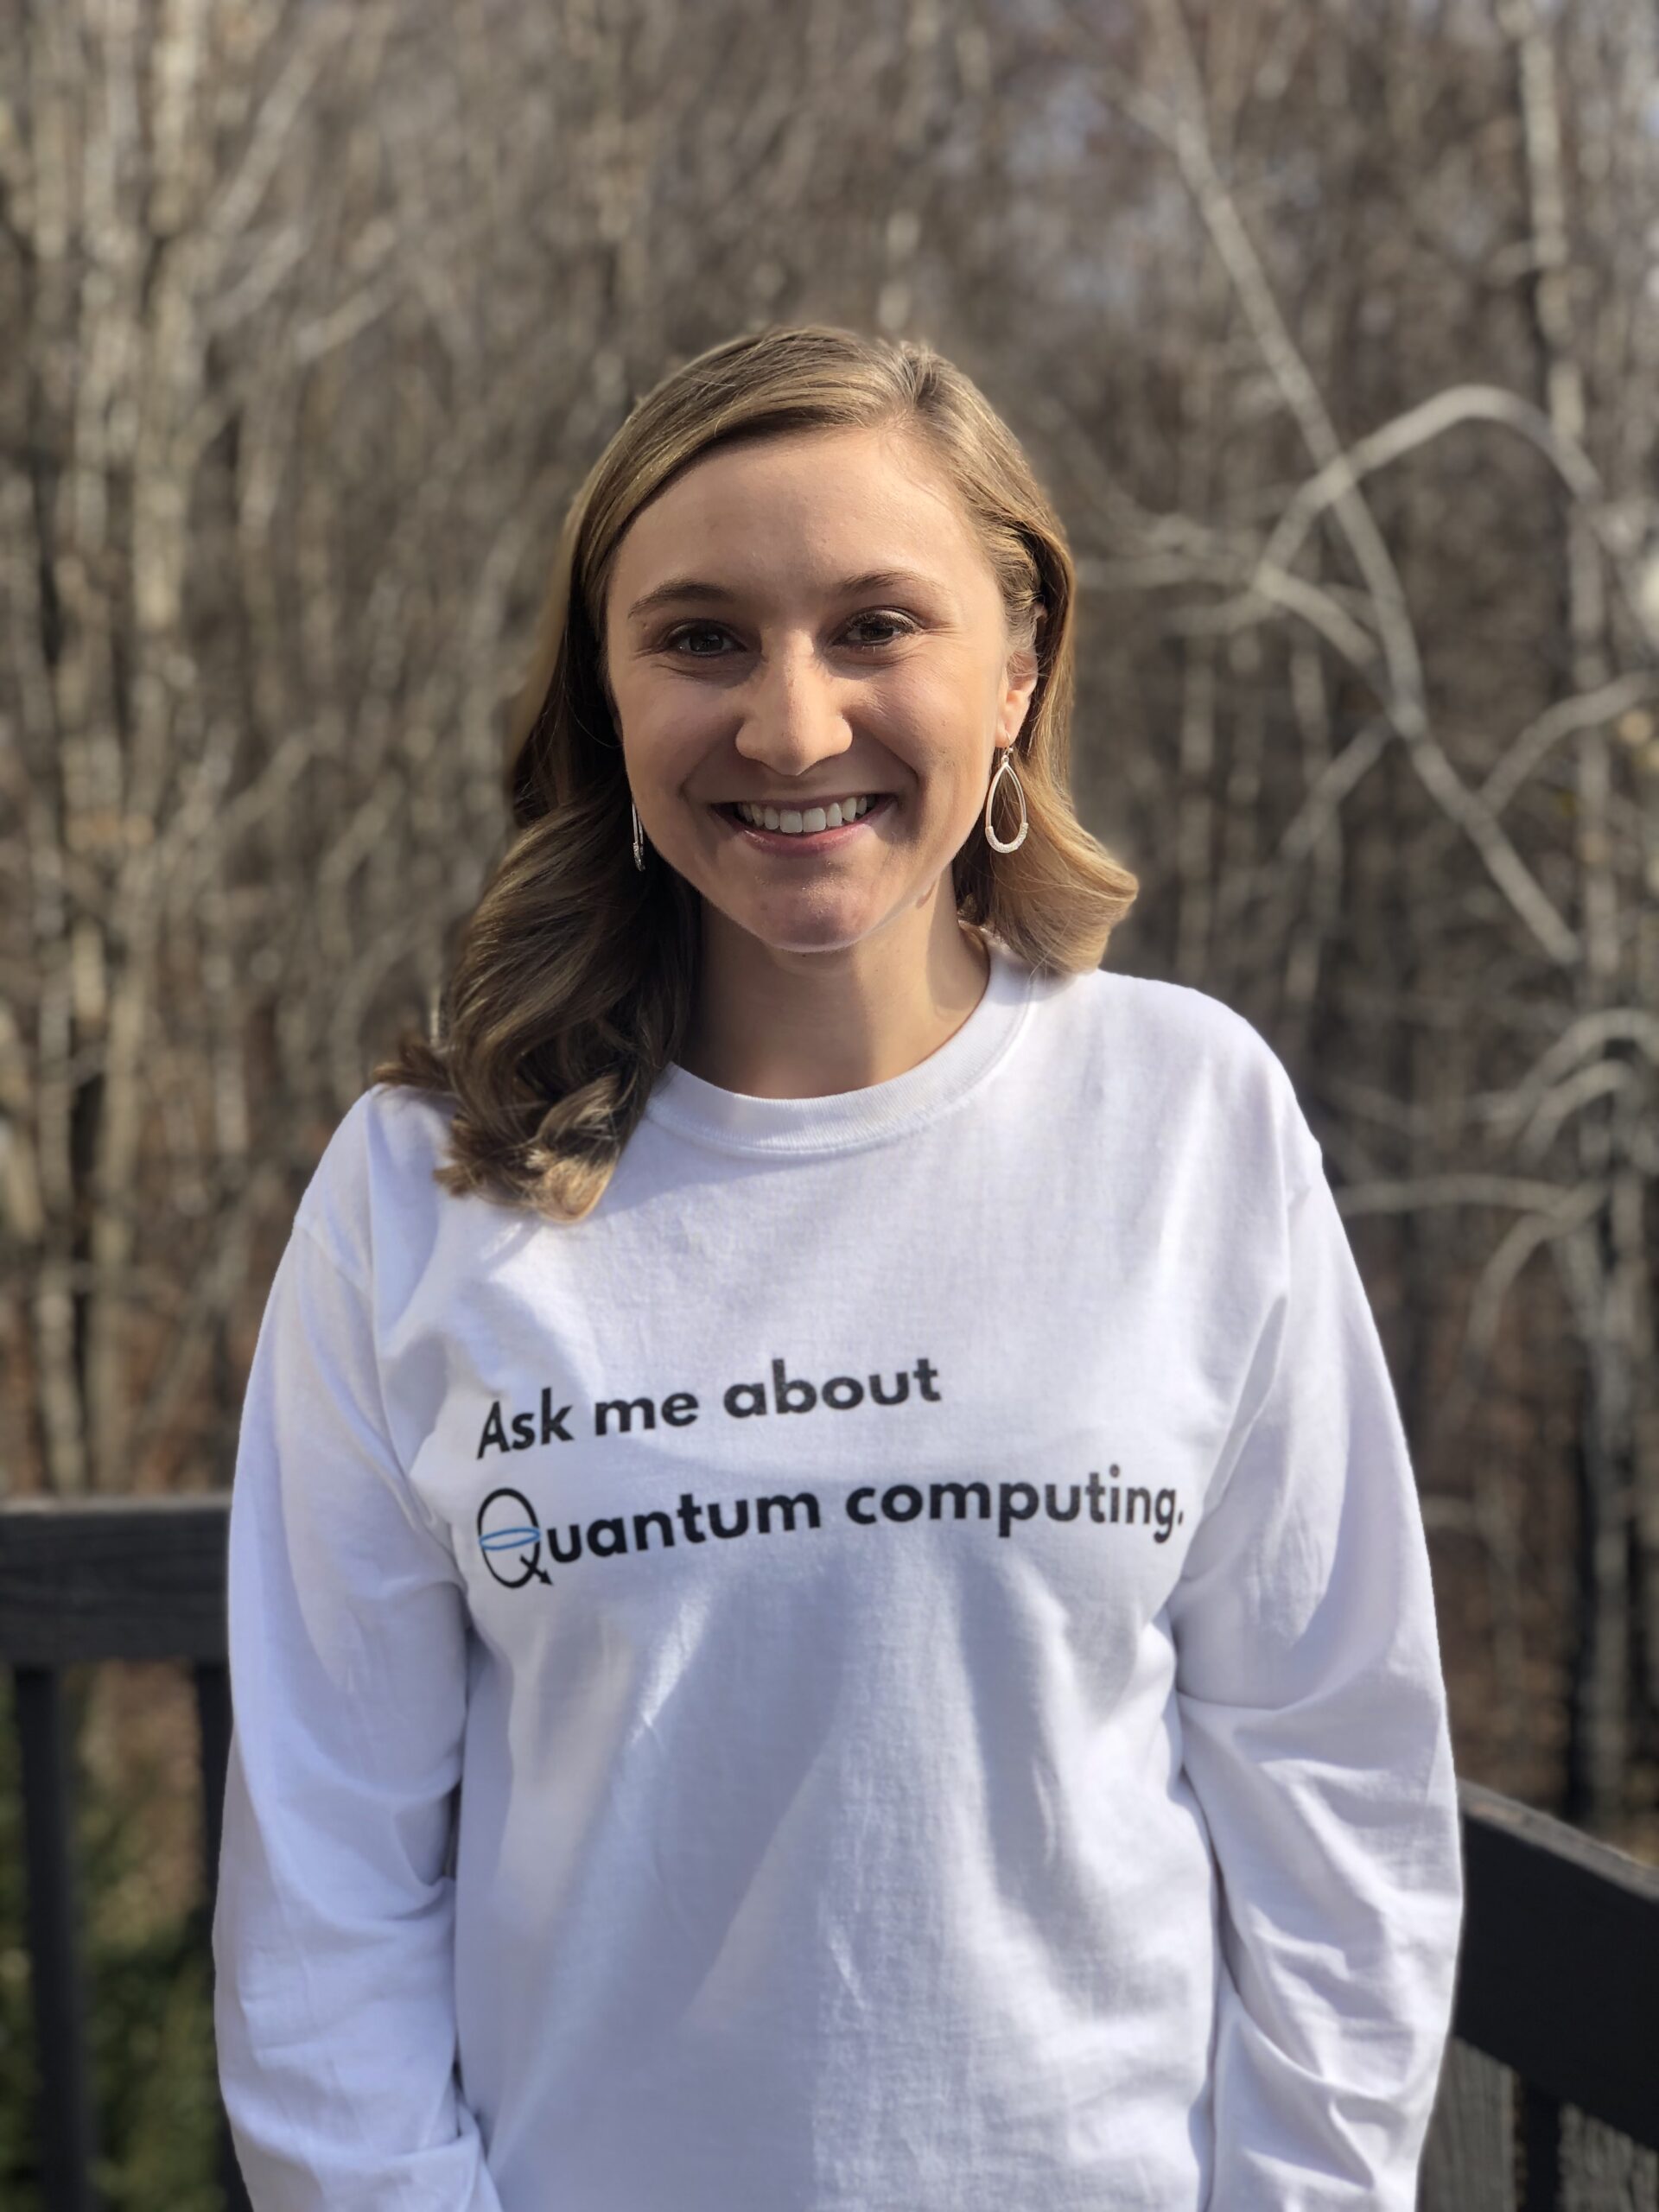 Rachel Zuckerman, Program Director of Qubit by Qubit, discusses celebrating World Quantum Day and the quantum workforce.